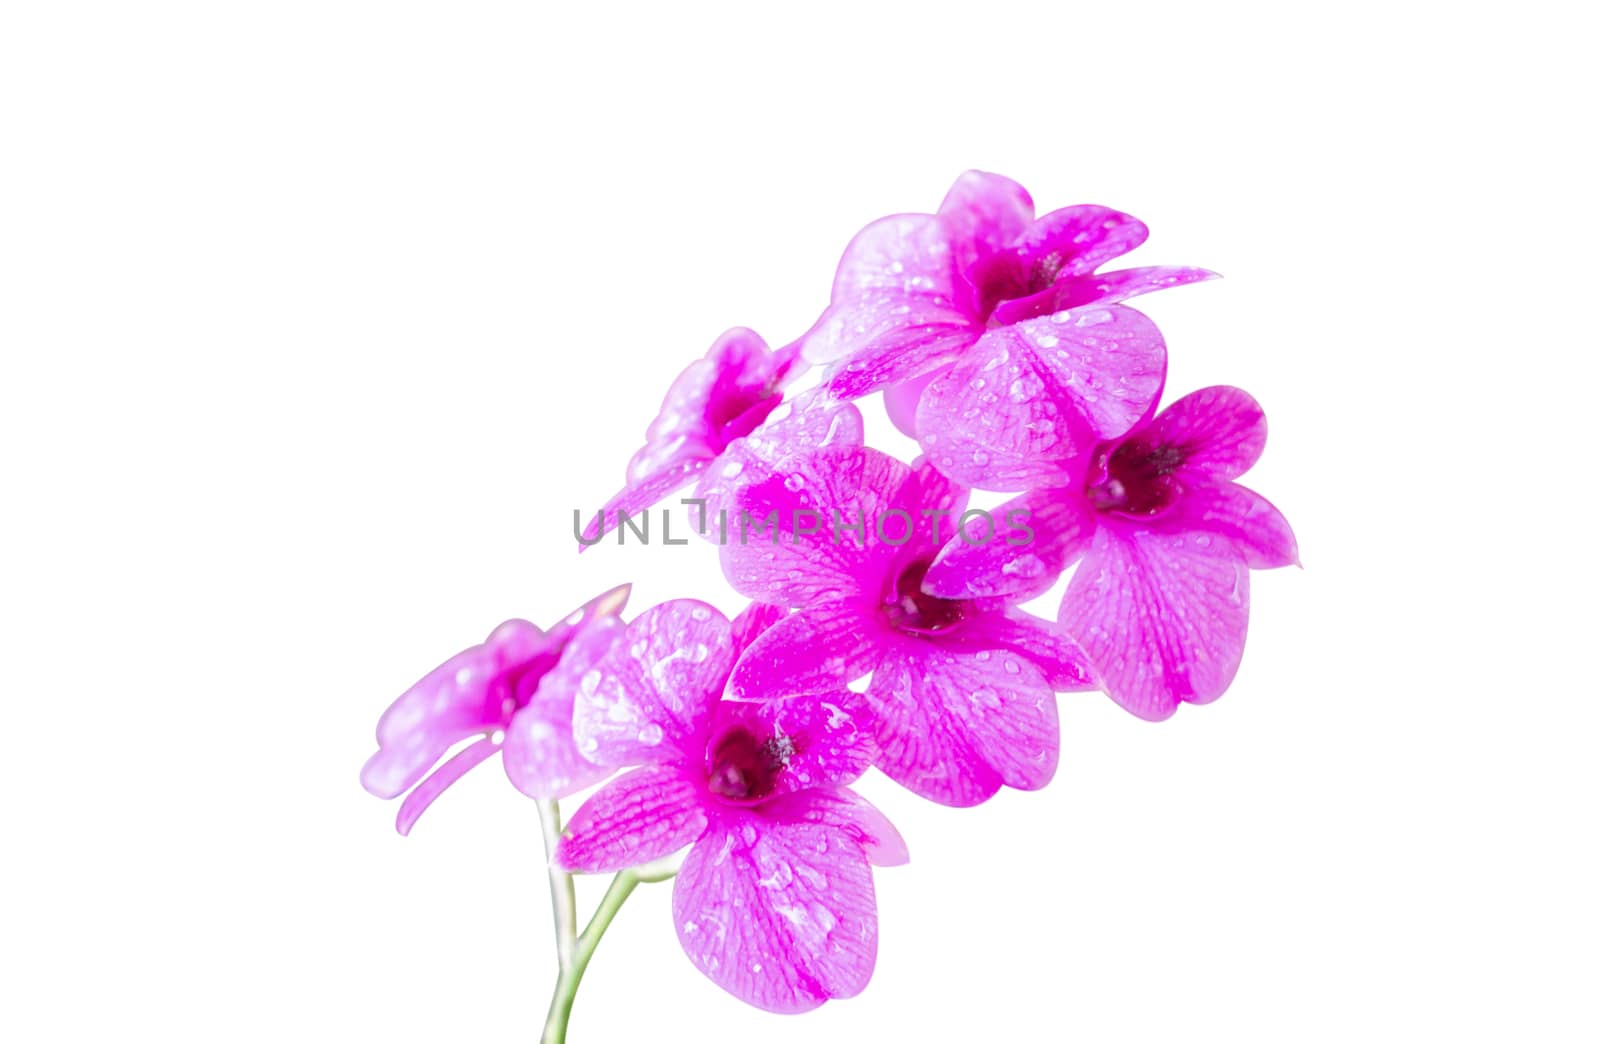 Closeup purple orchid flower on white background by pt.pongsak@gmail.com